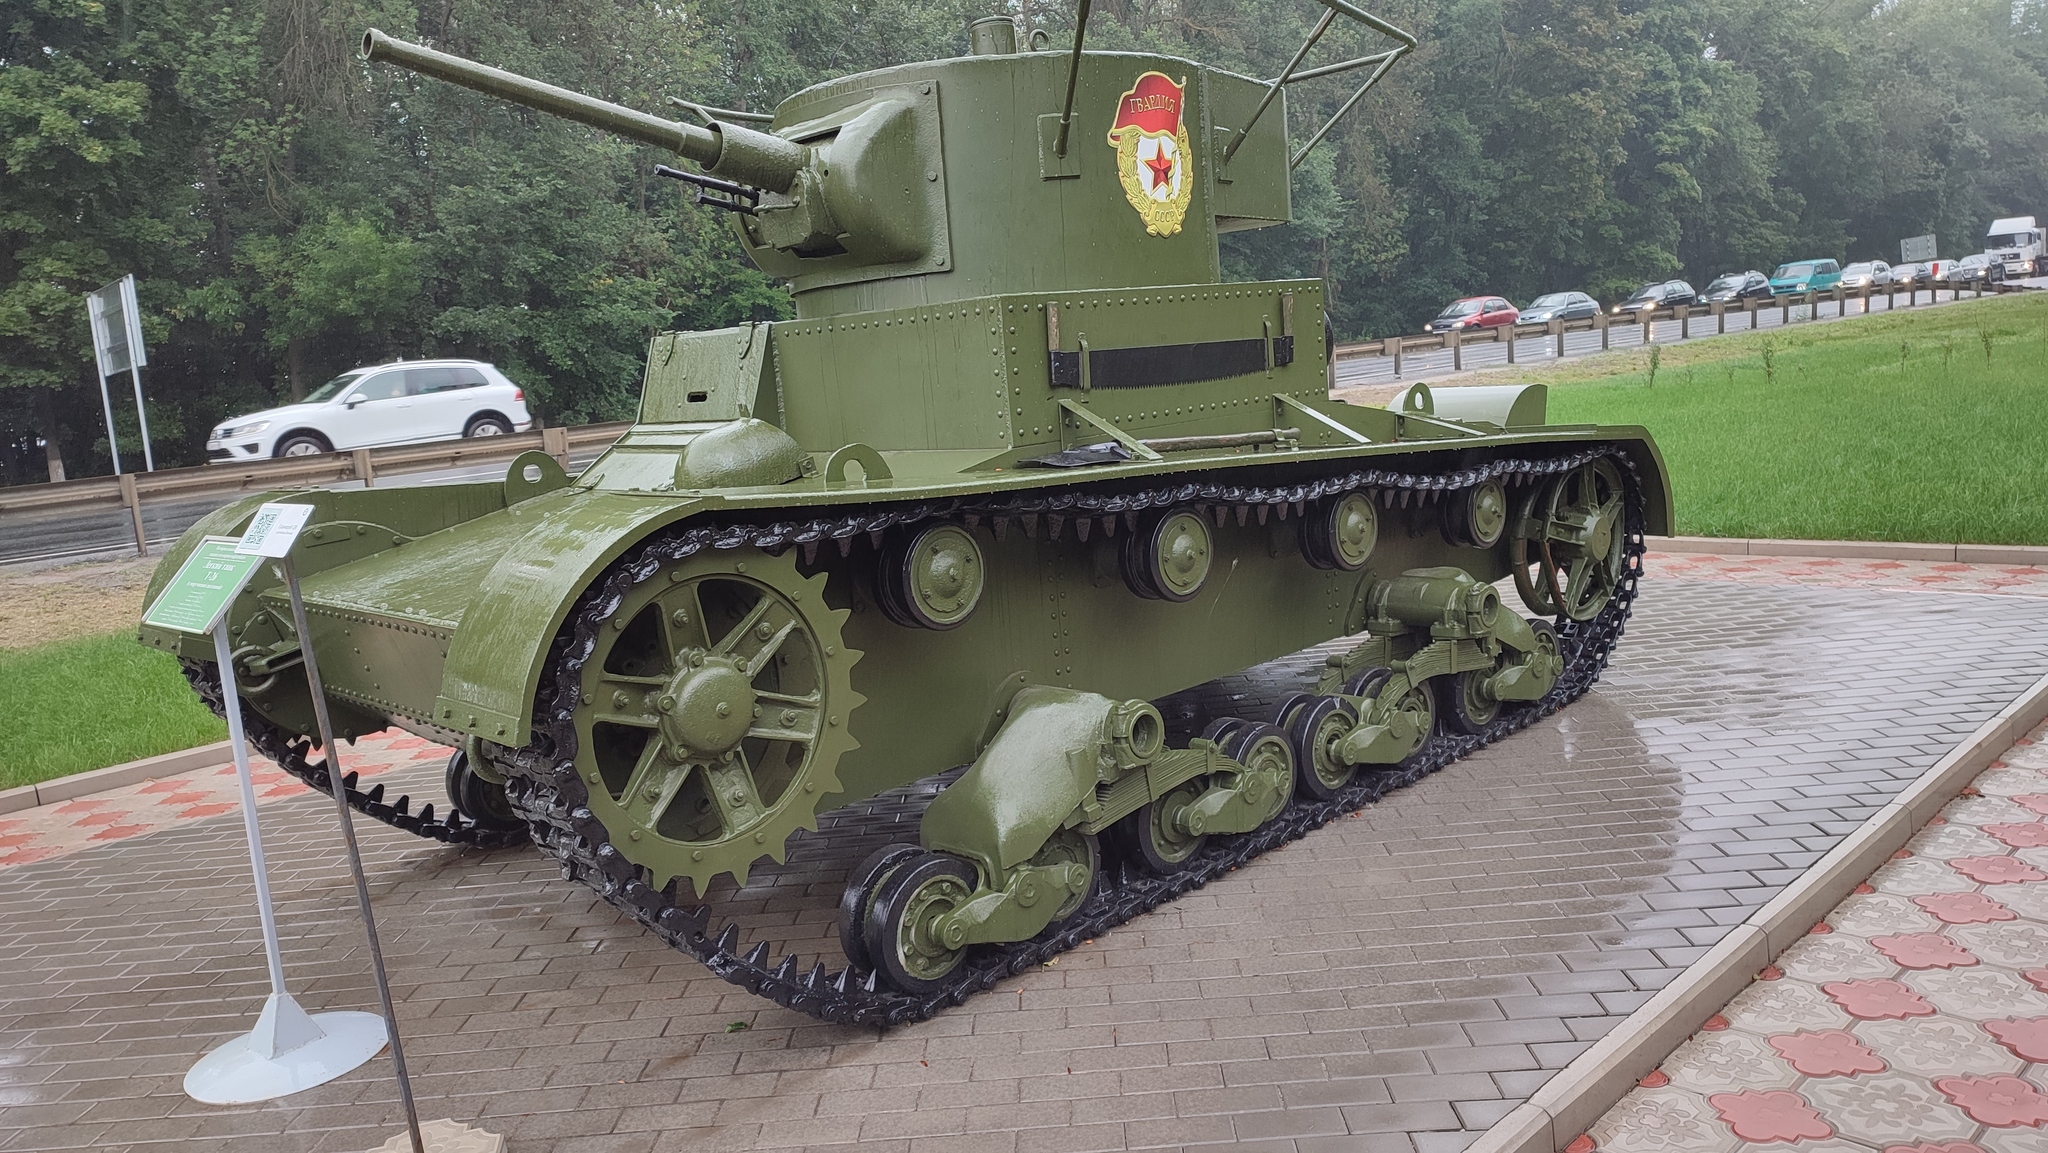 Few tanks - My, Tanks, Tankers, Museum of technology, The Great Patriotic War, Longpost